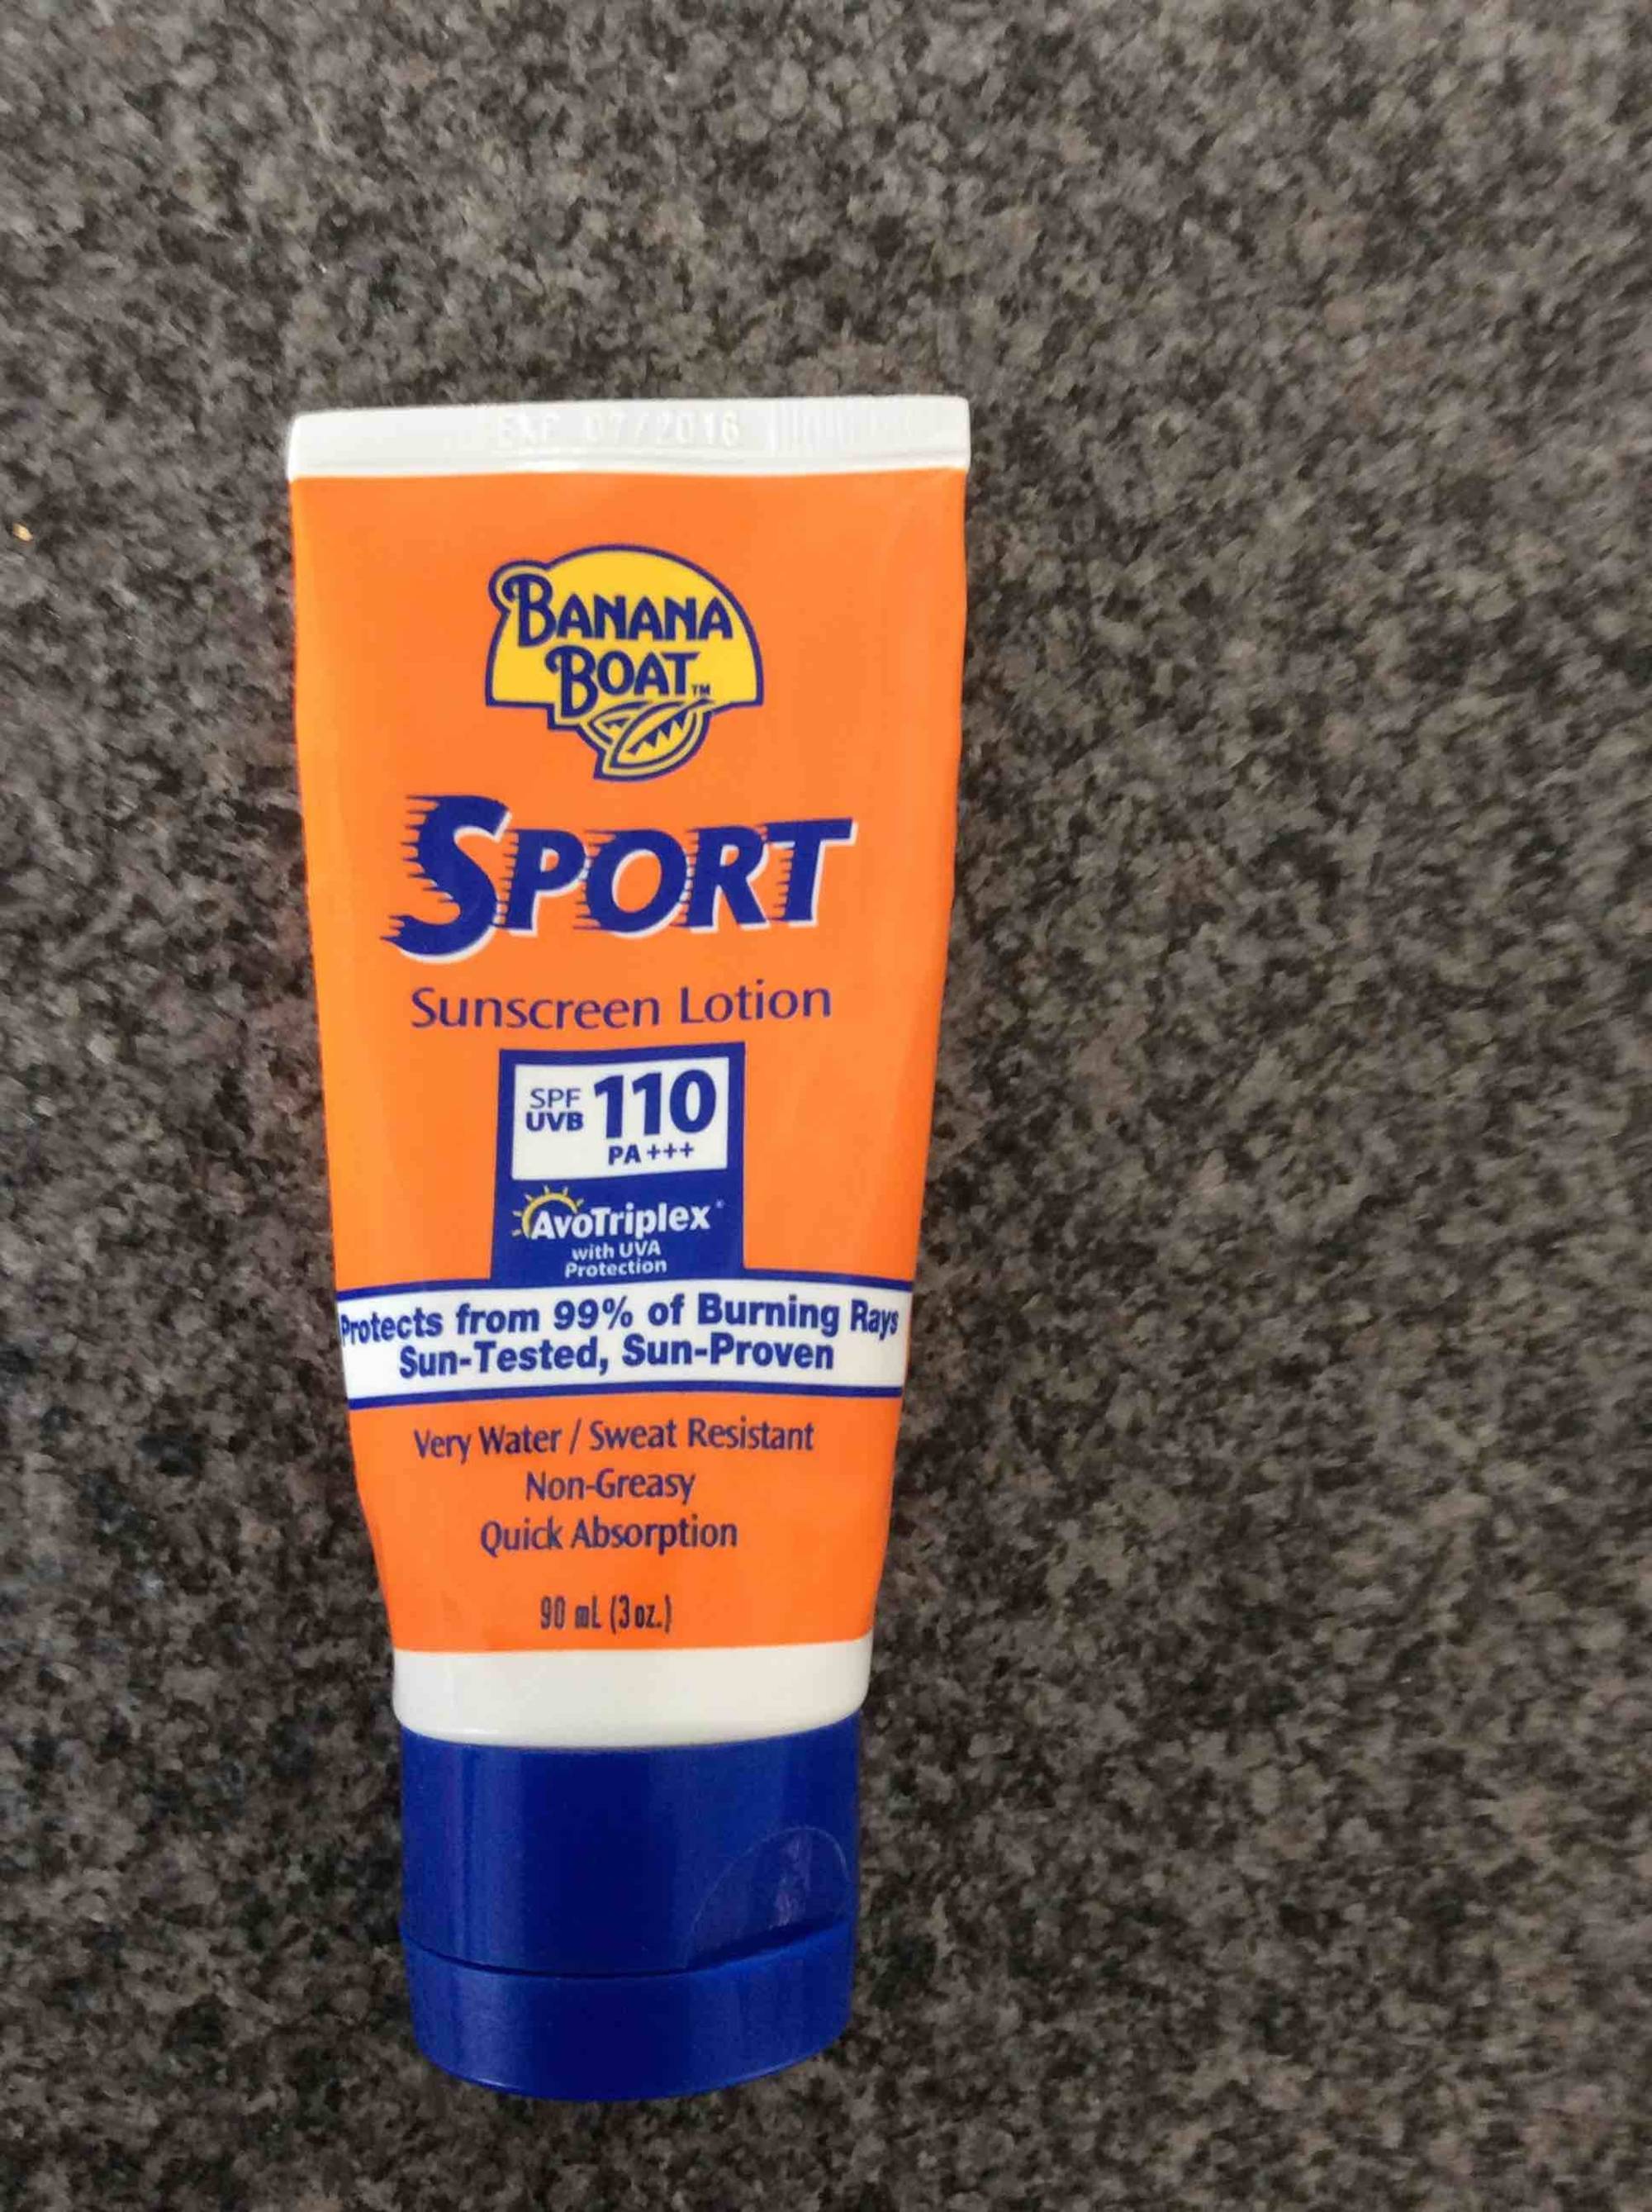 BANANA BOAT - Sport - Sunscreen lotion SPF 110 PA+++ avotriplex